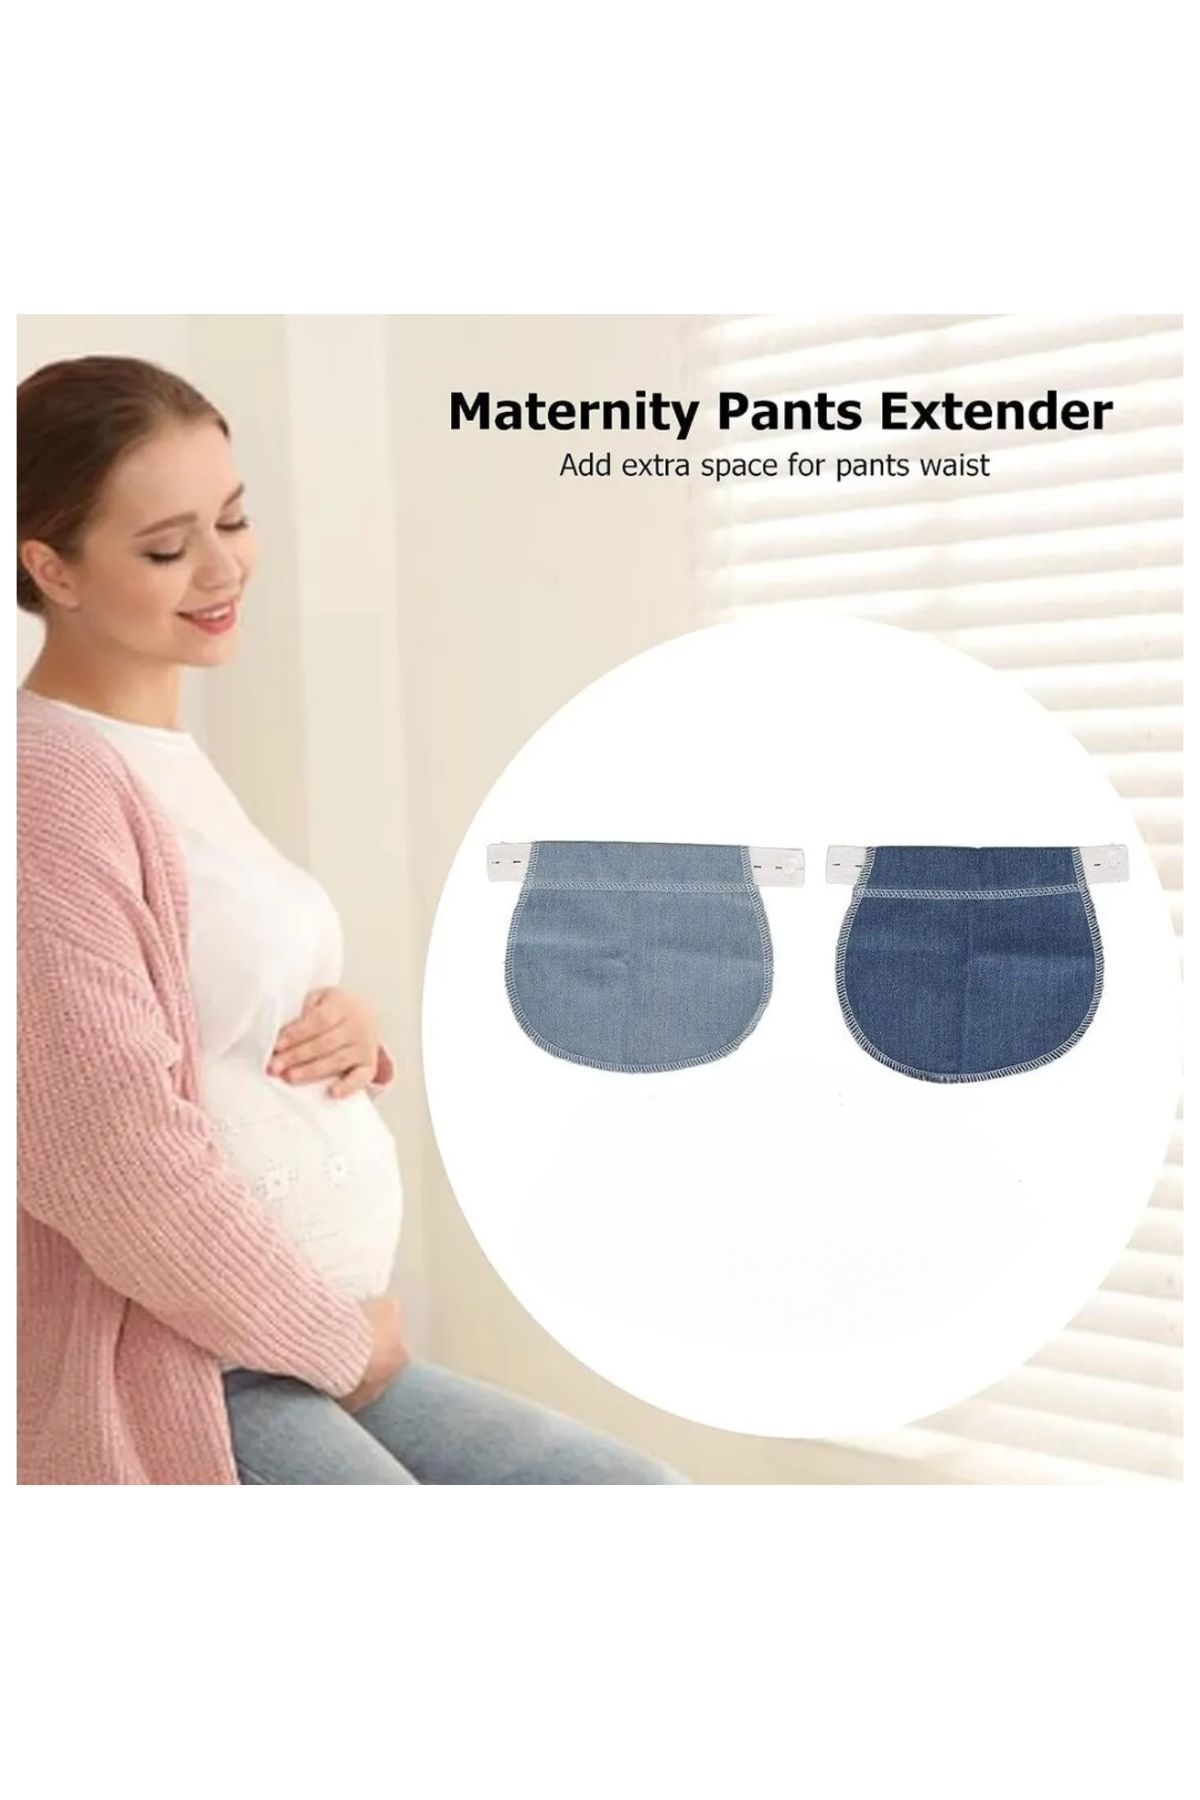 a02teks Maternity Pants Waist Extender - Trousers Extender for women 2pcs